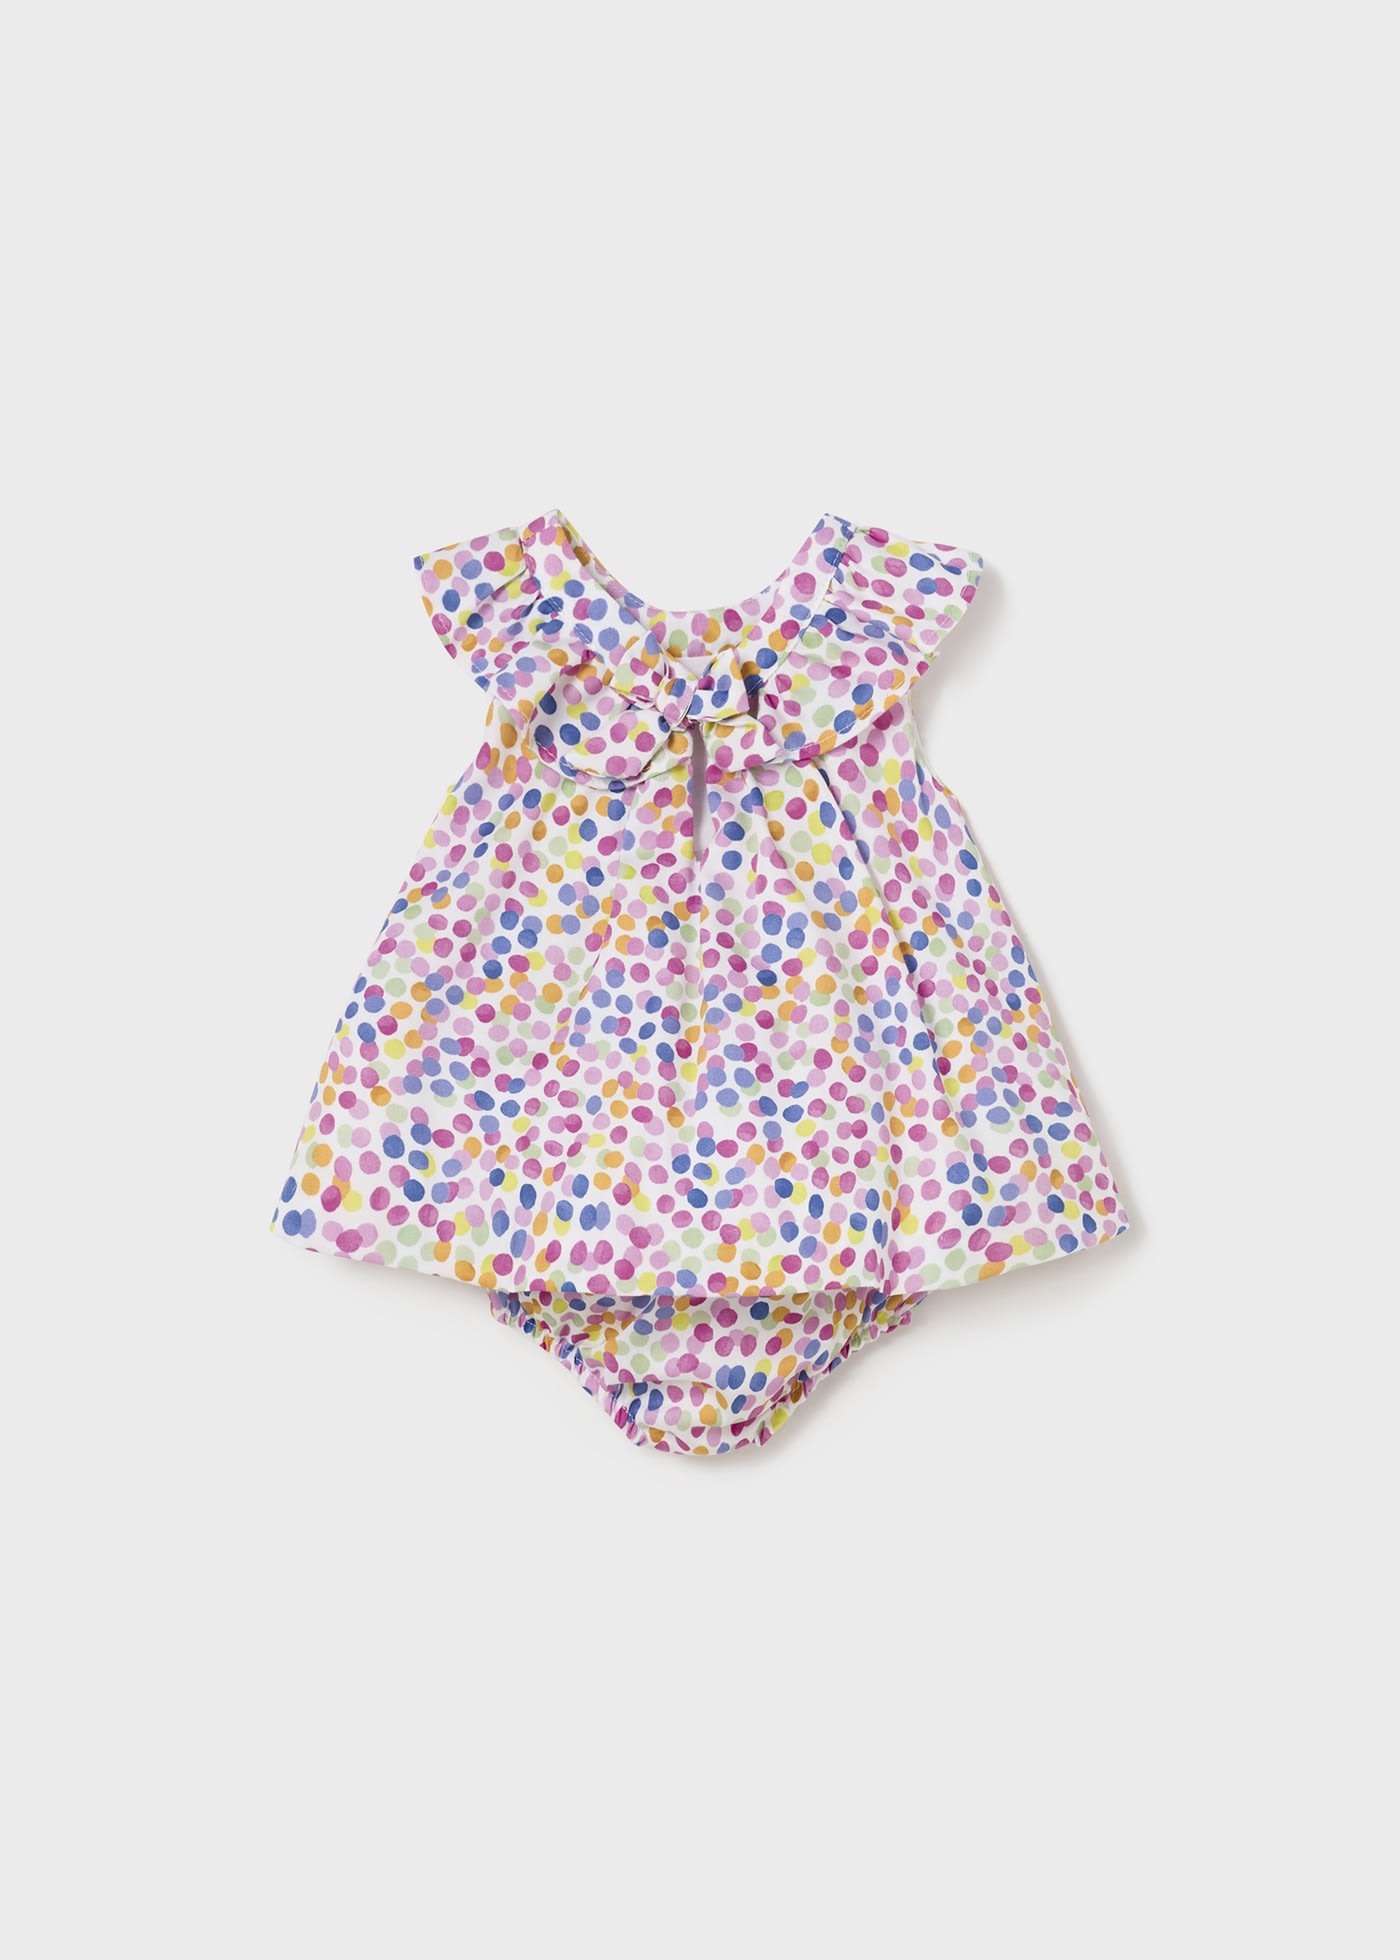 Newborn printed dress with bloomer set